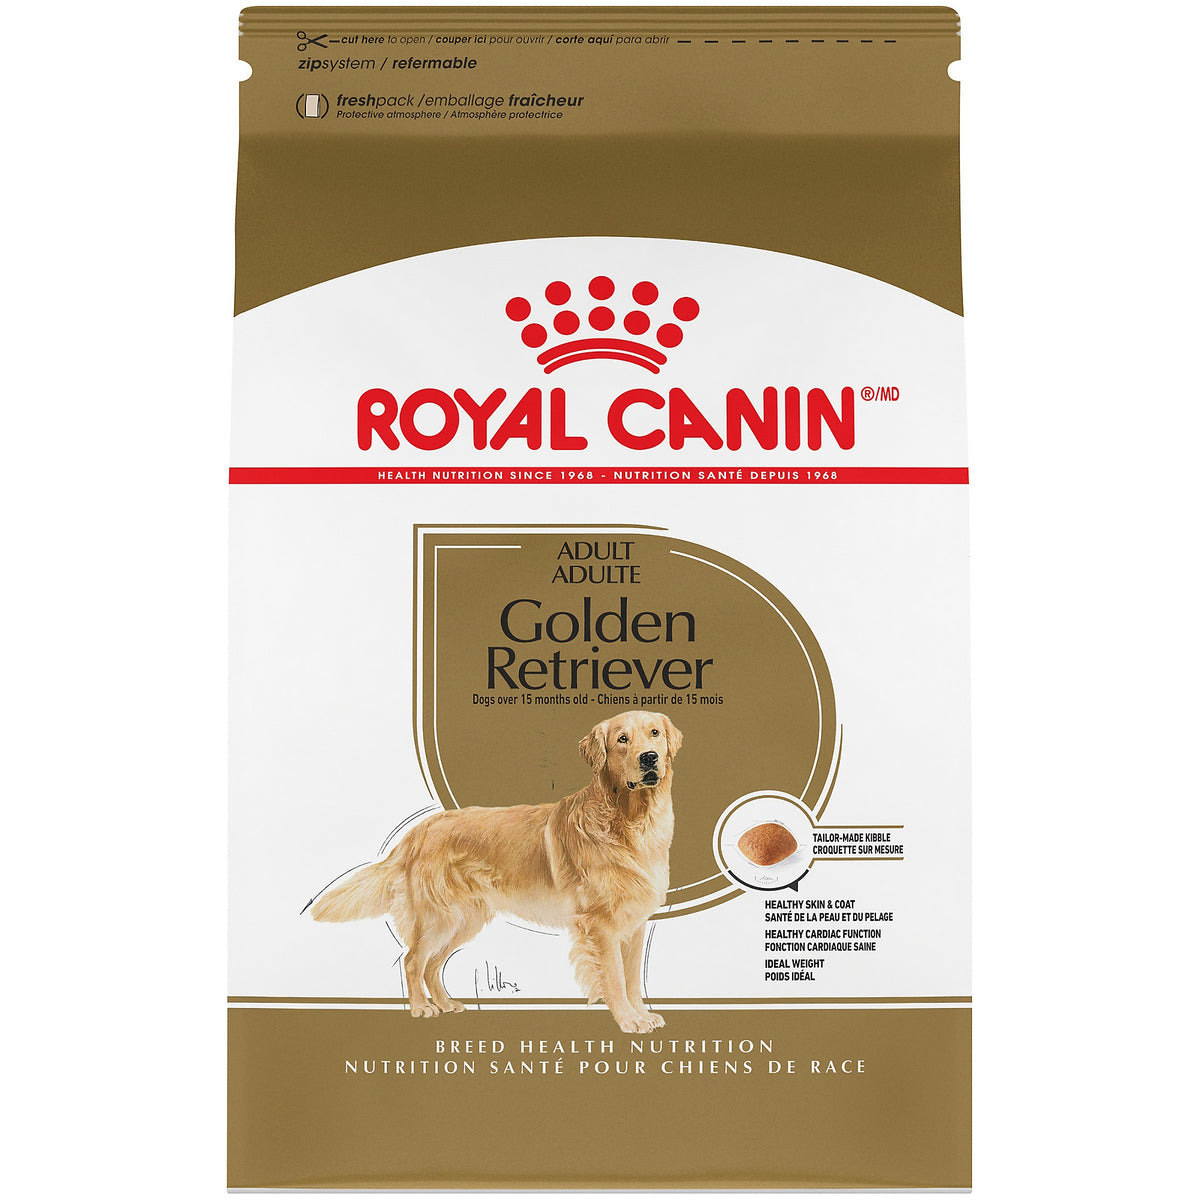 Royal Canin Adult Golden Retriever Dog Food